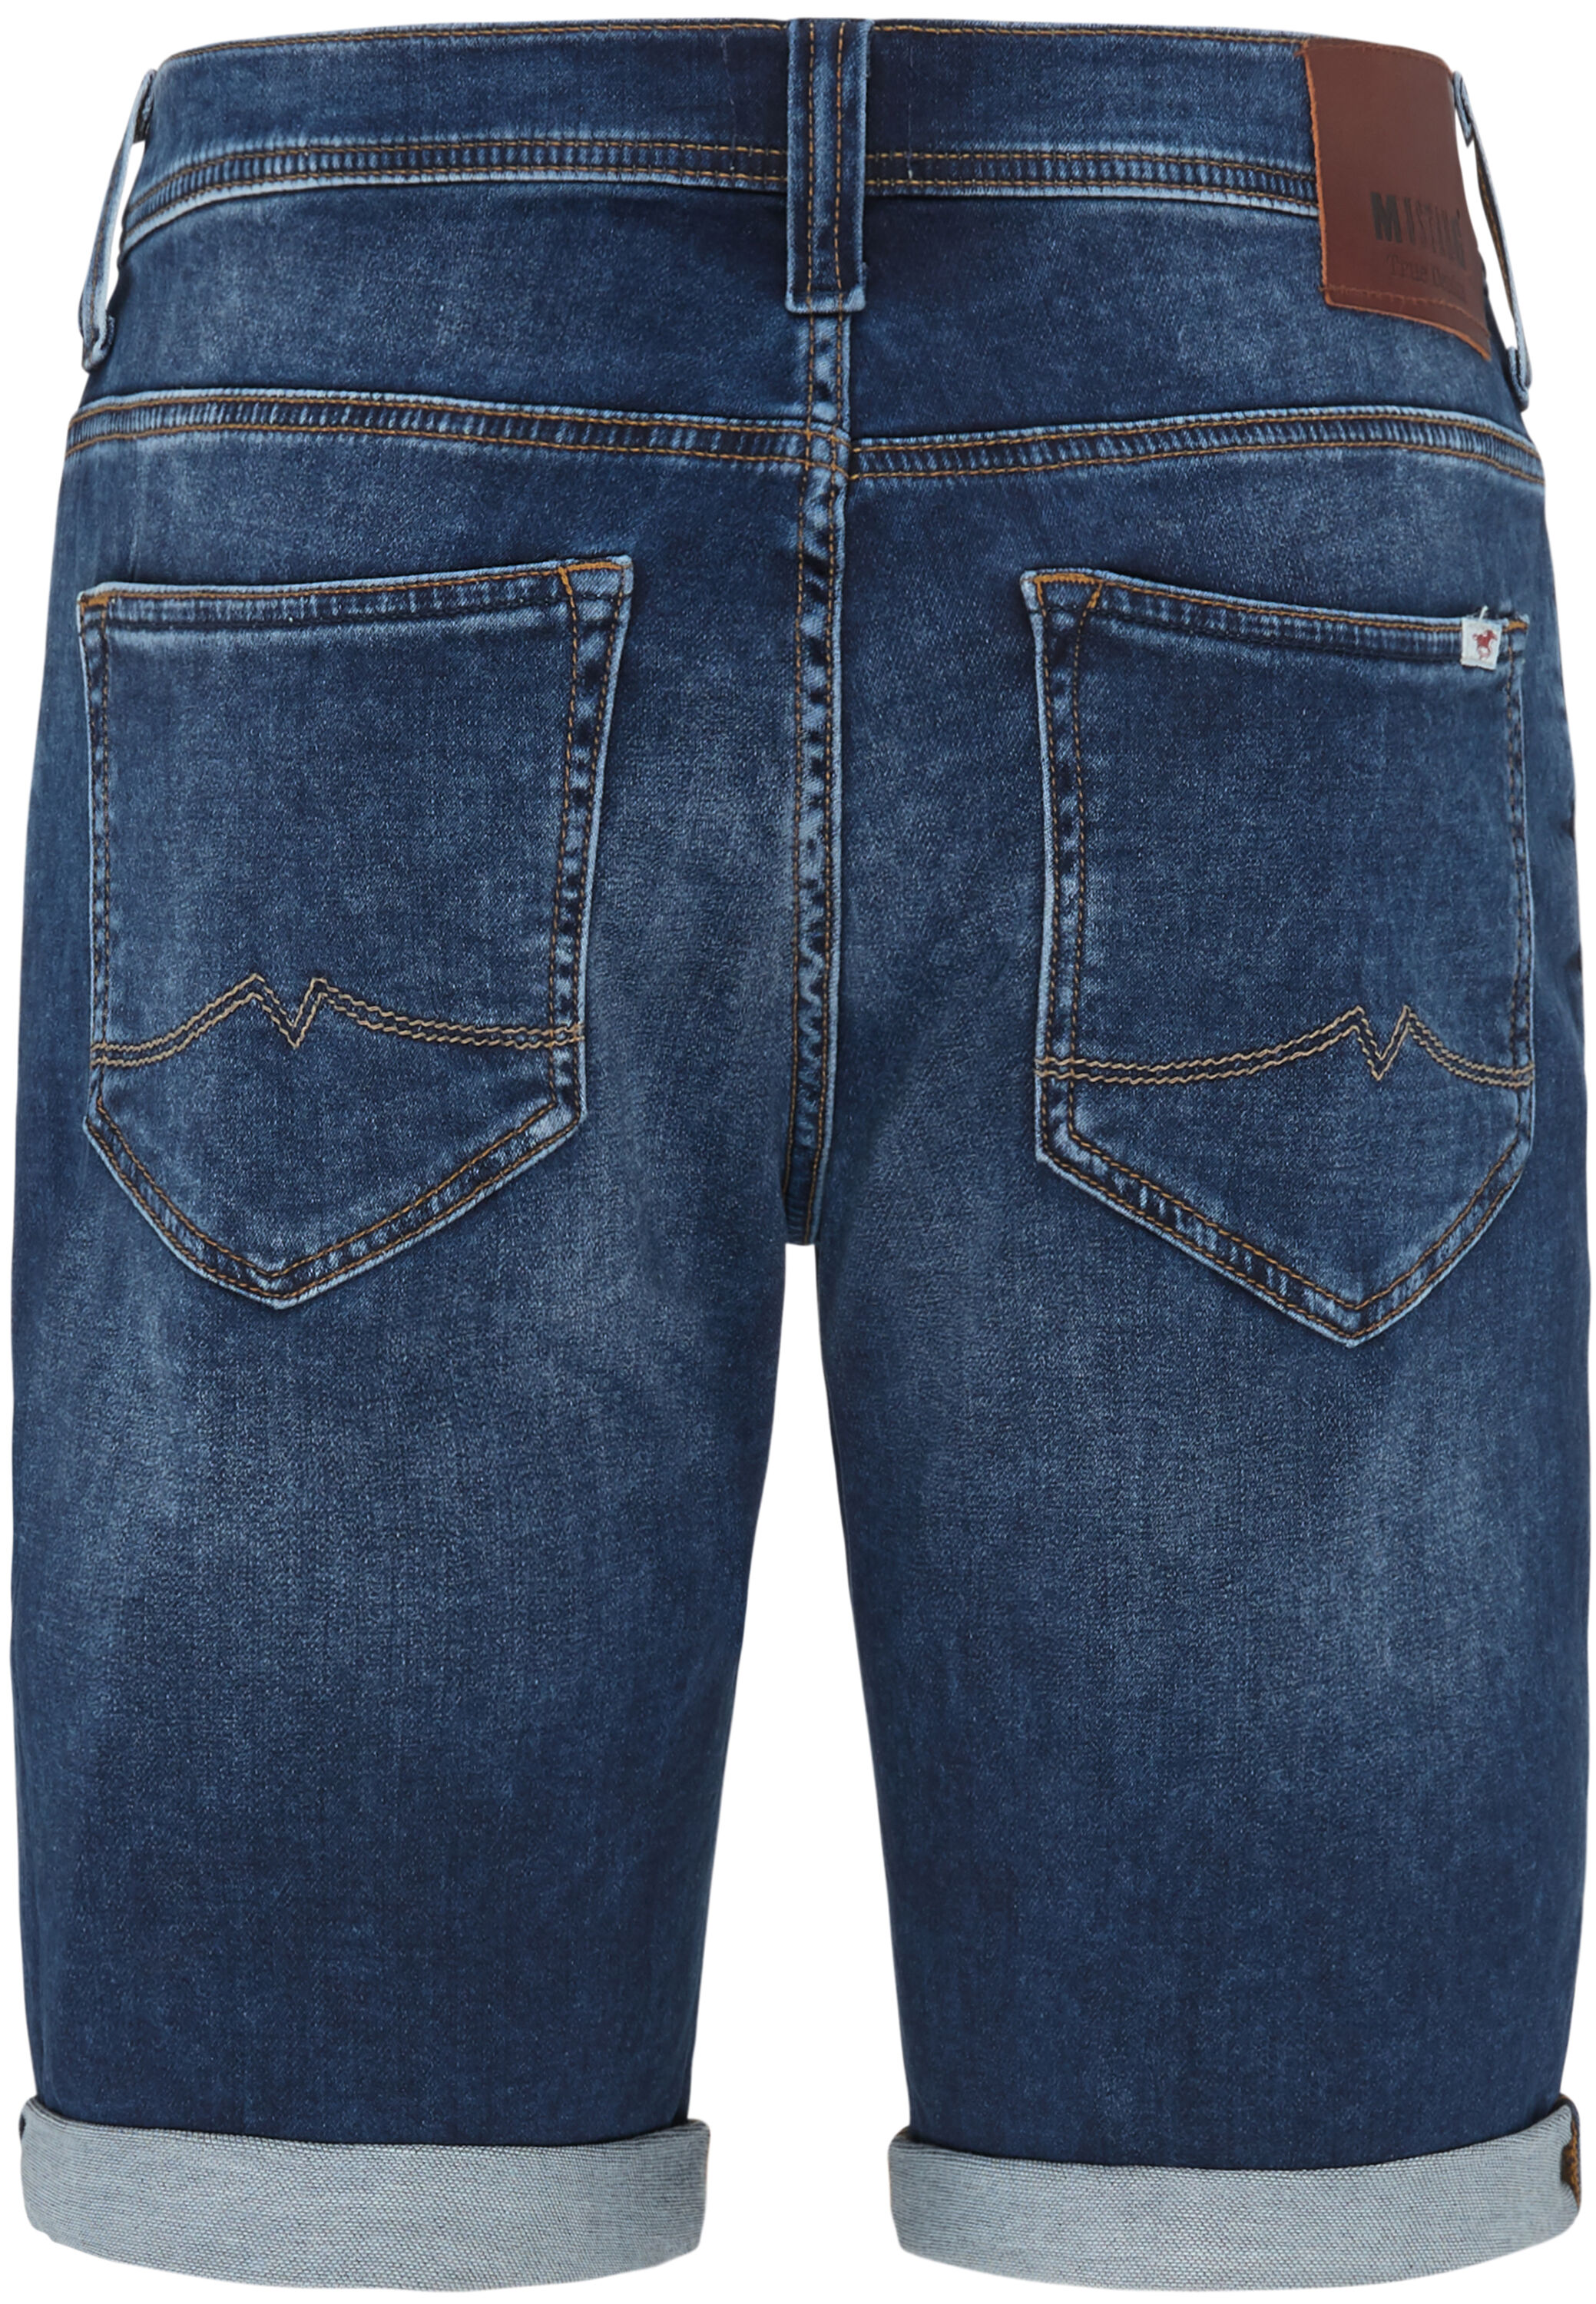 MUSTANG Jeans Shorts Herren  Jeanshose Kurze Hose Bermuda Chicago 683 Denim Blue 